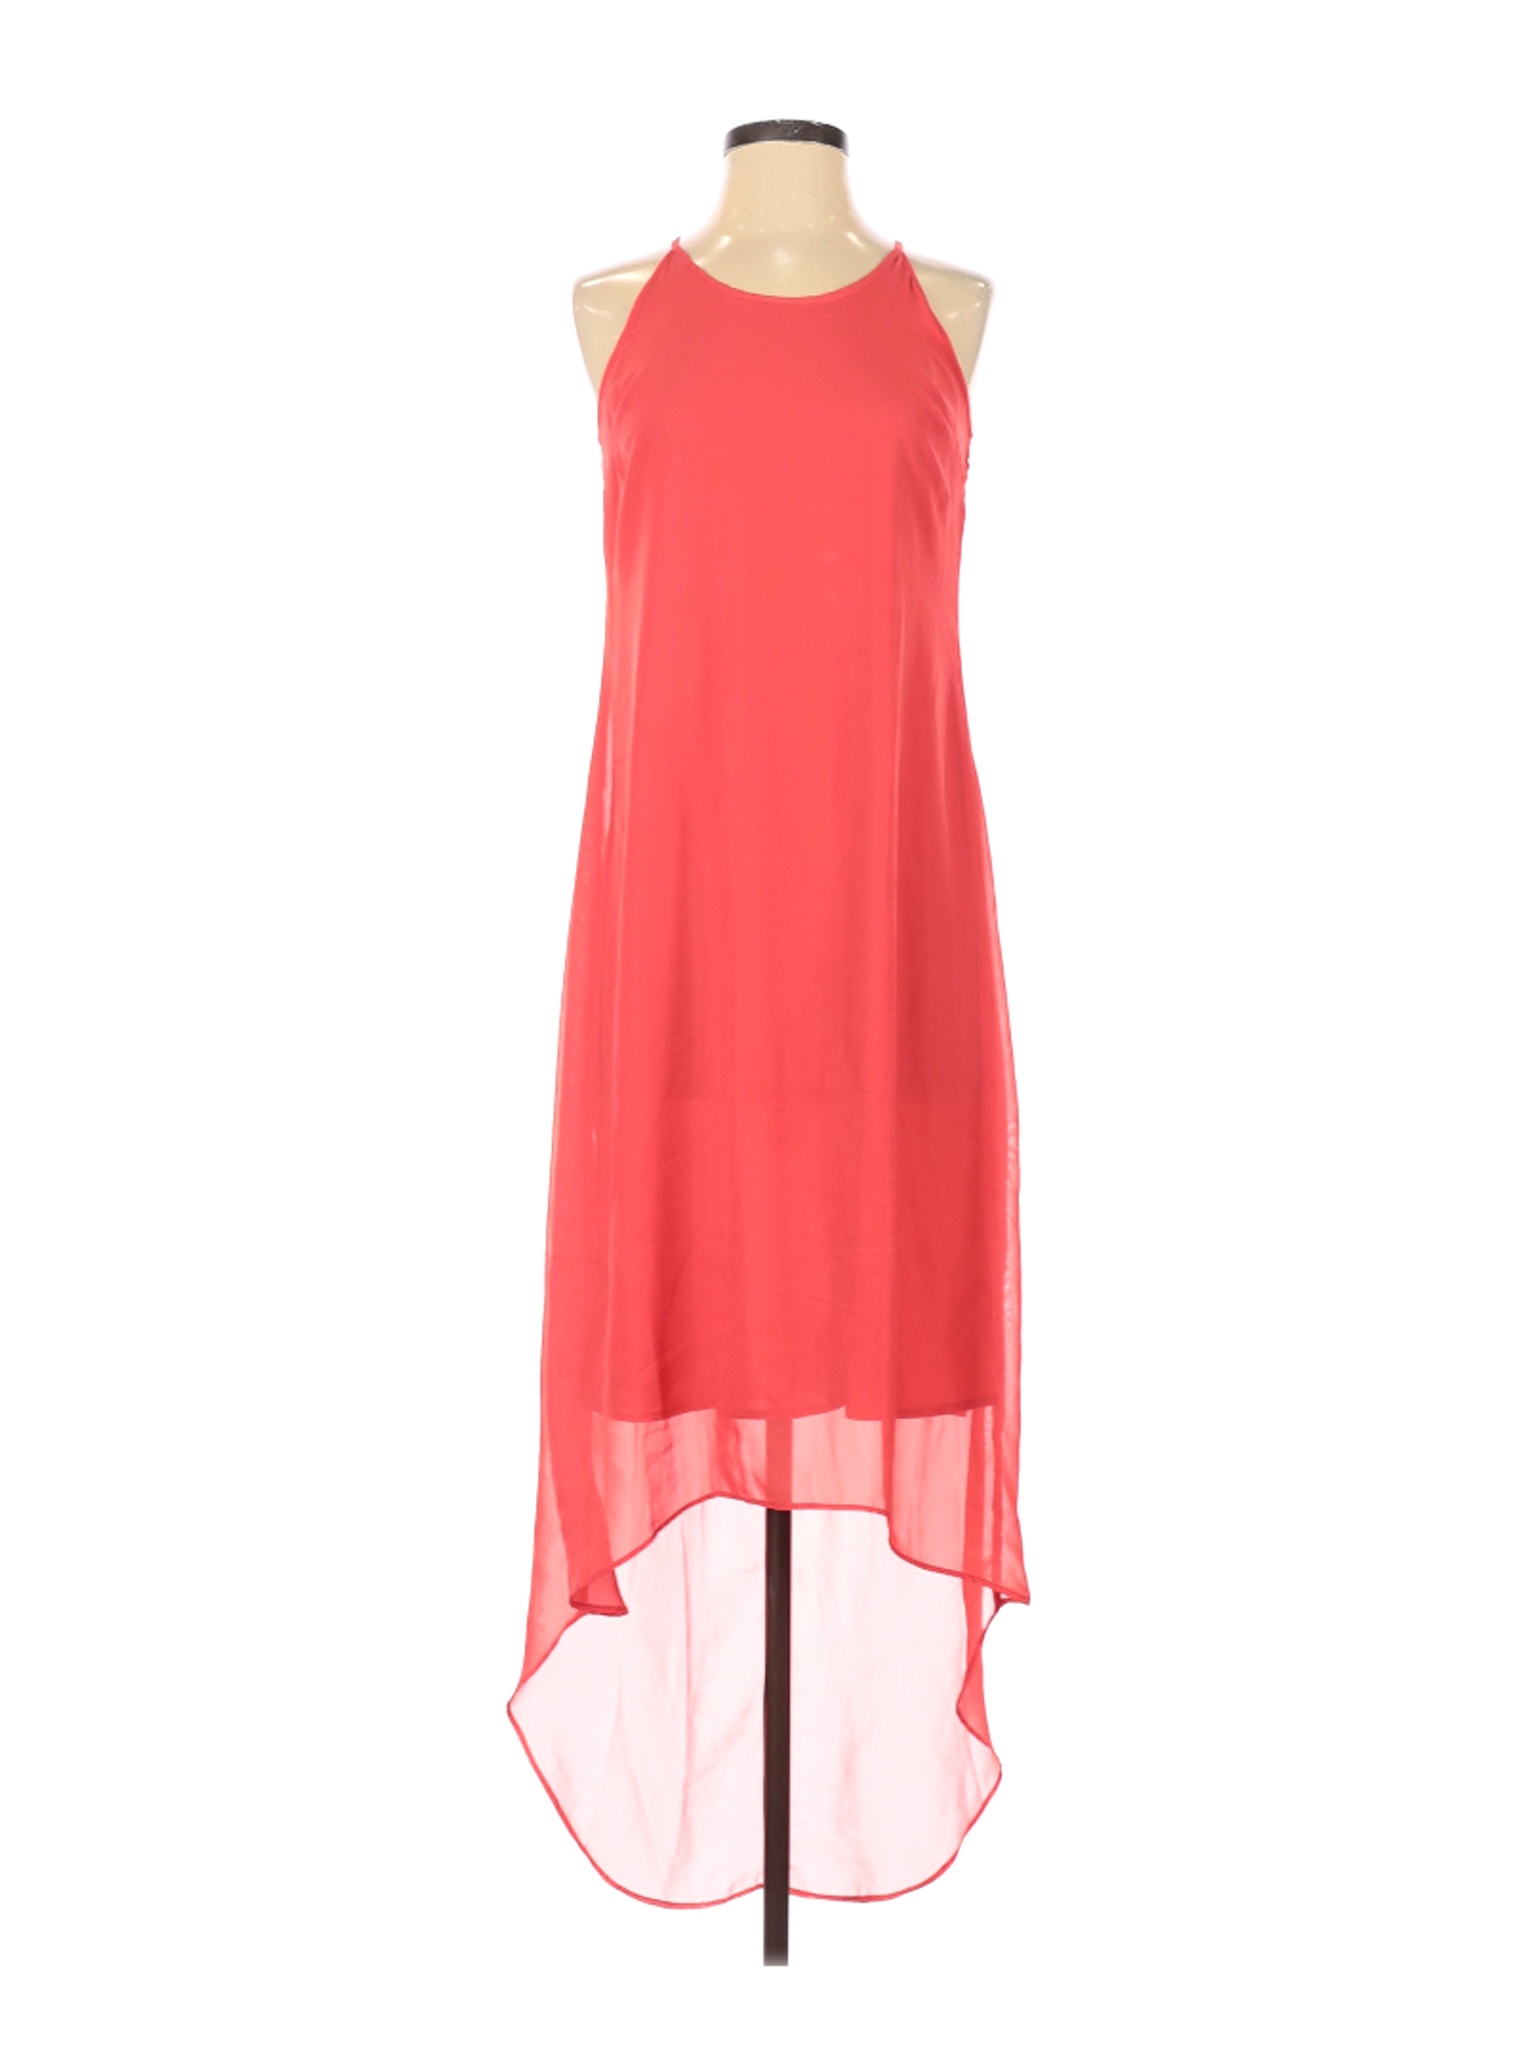 Old Navy Women Pink Casual Dress XS | eBay